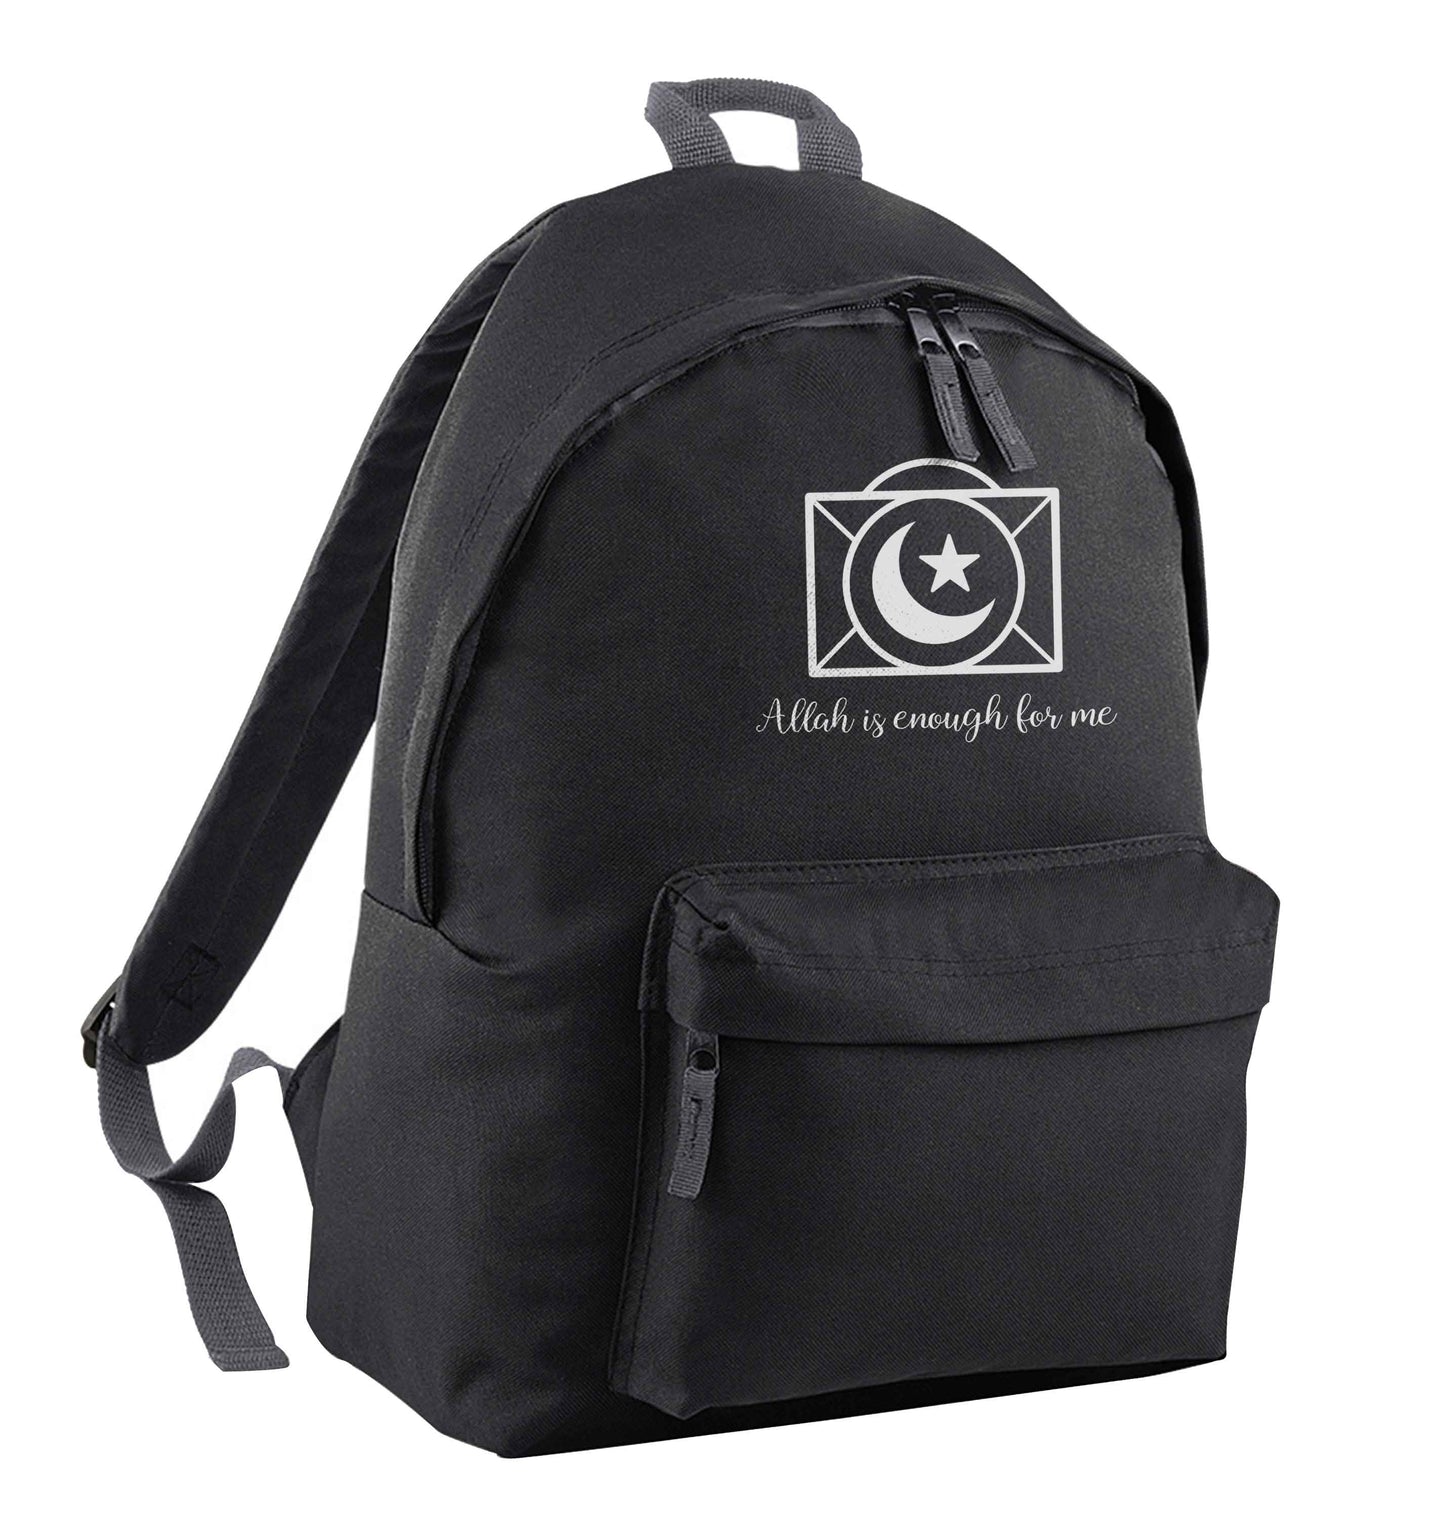 Allah is enough for me black children's backpack